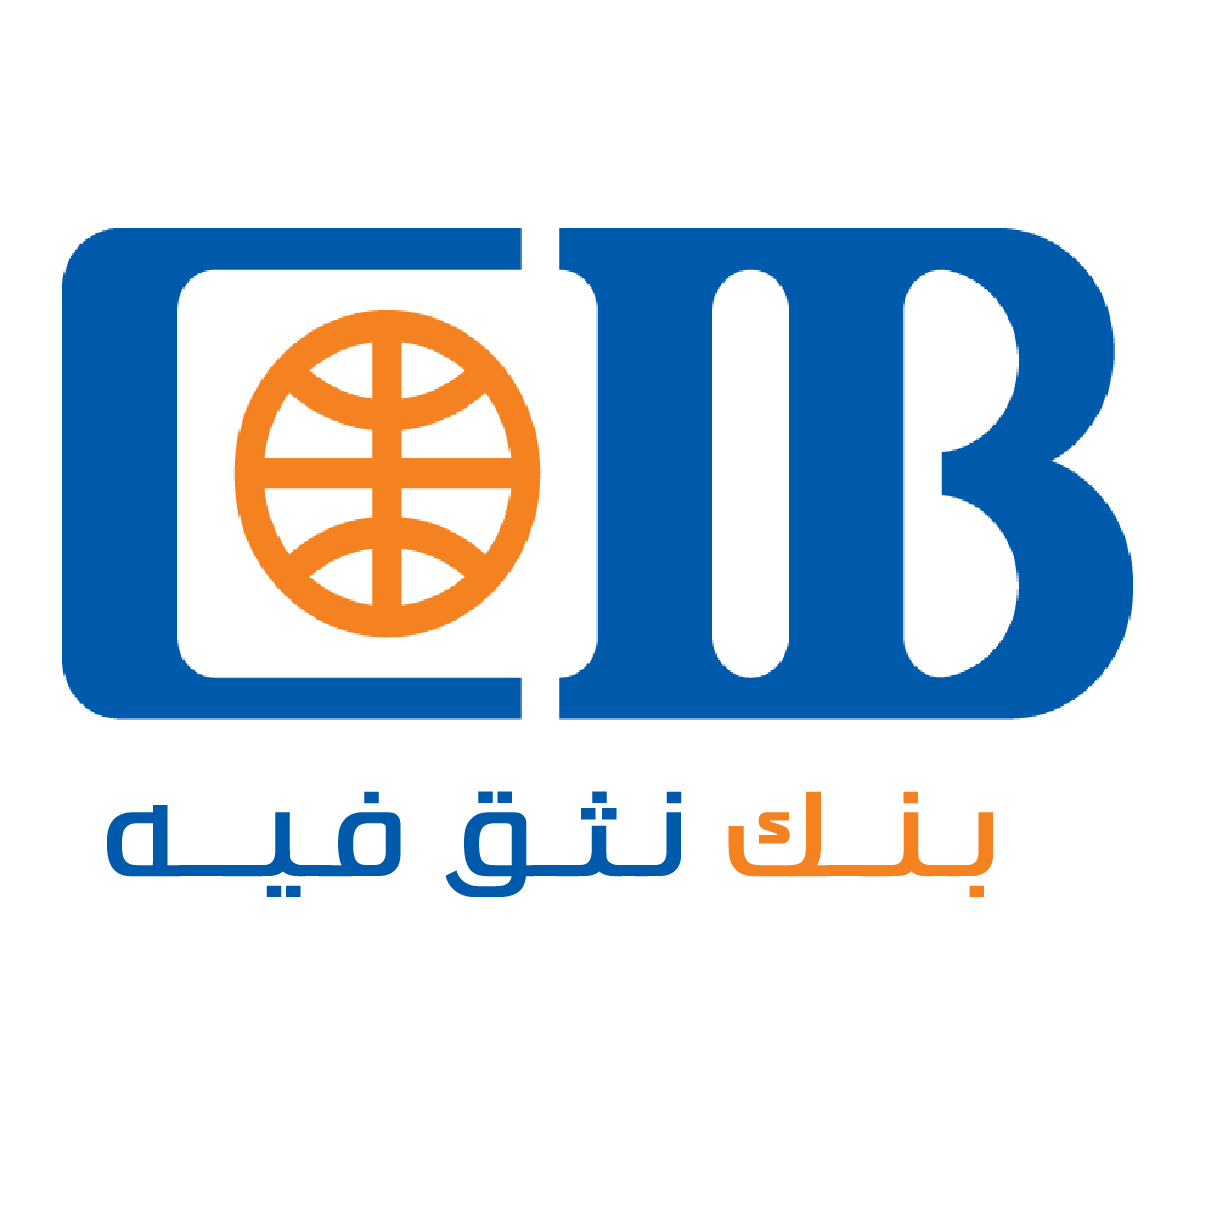 ‏CIB Bank البنك التجاري الدولي‏